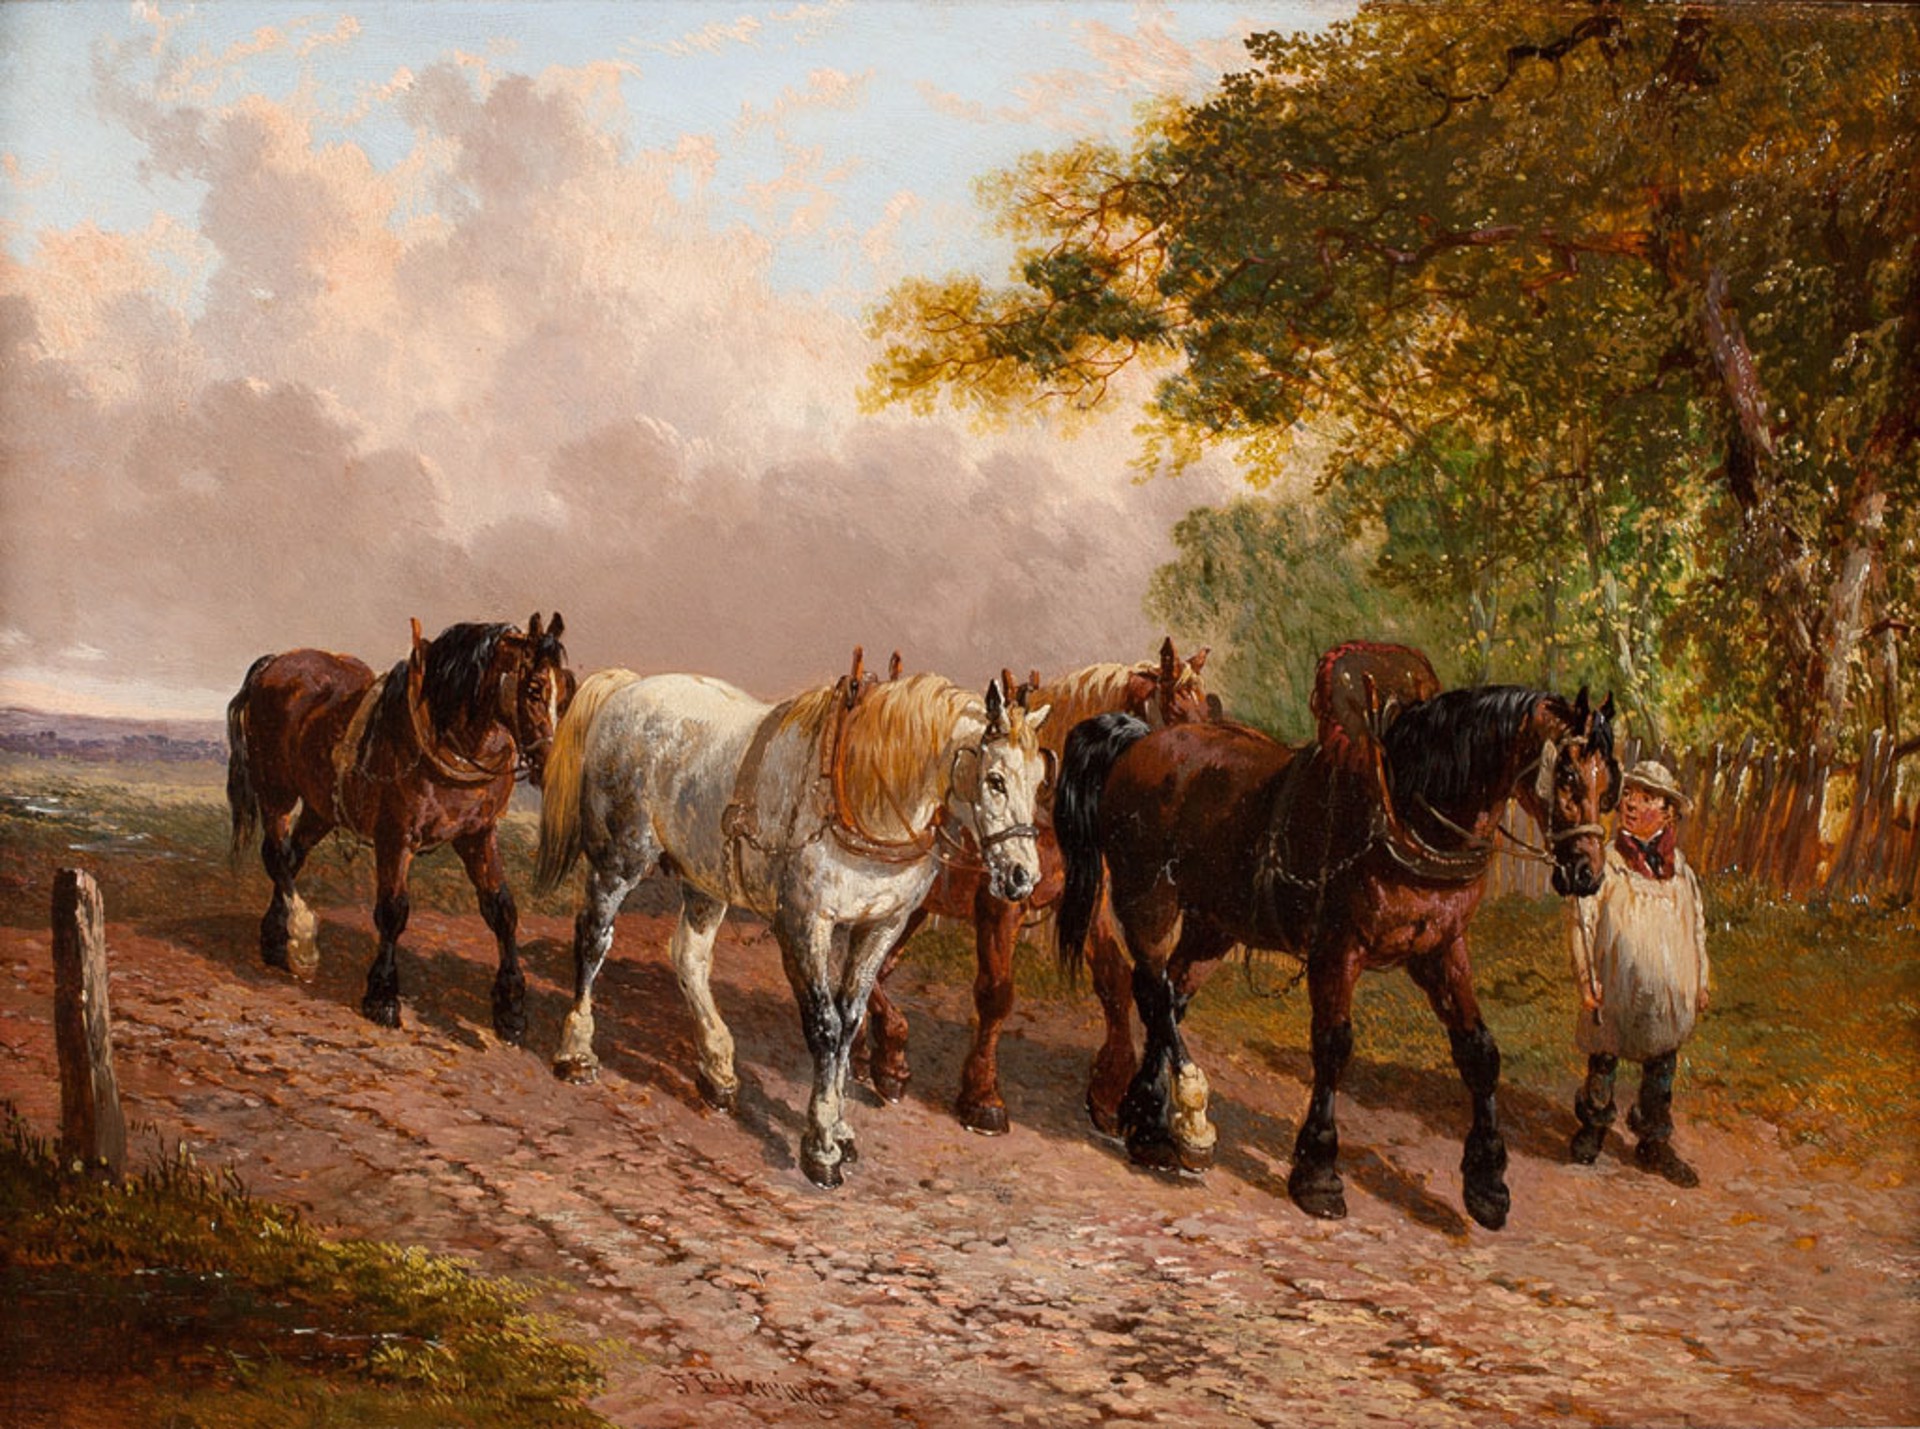 Farm Horses Returning from Work, after 1855 by John Frederick Herring, Jr.